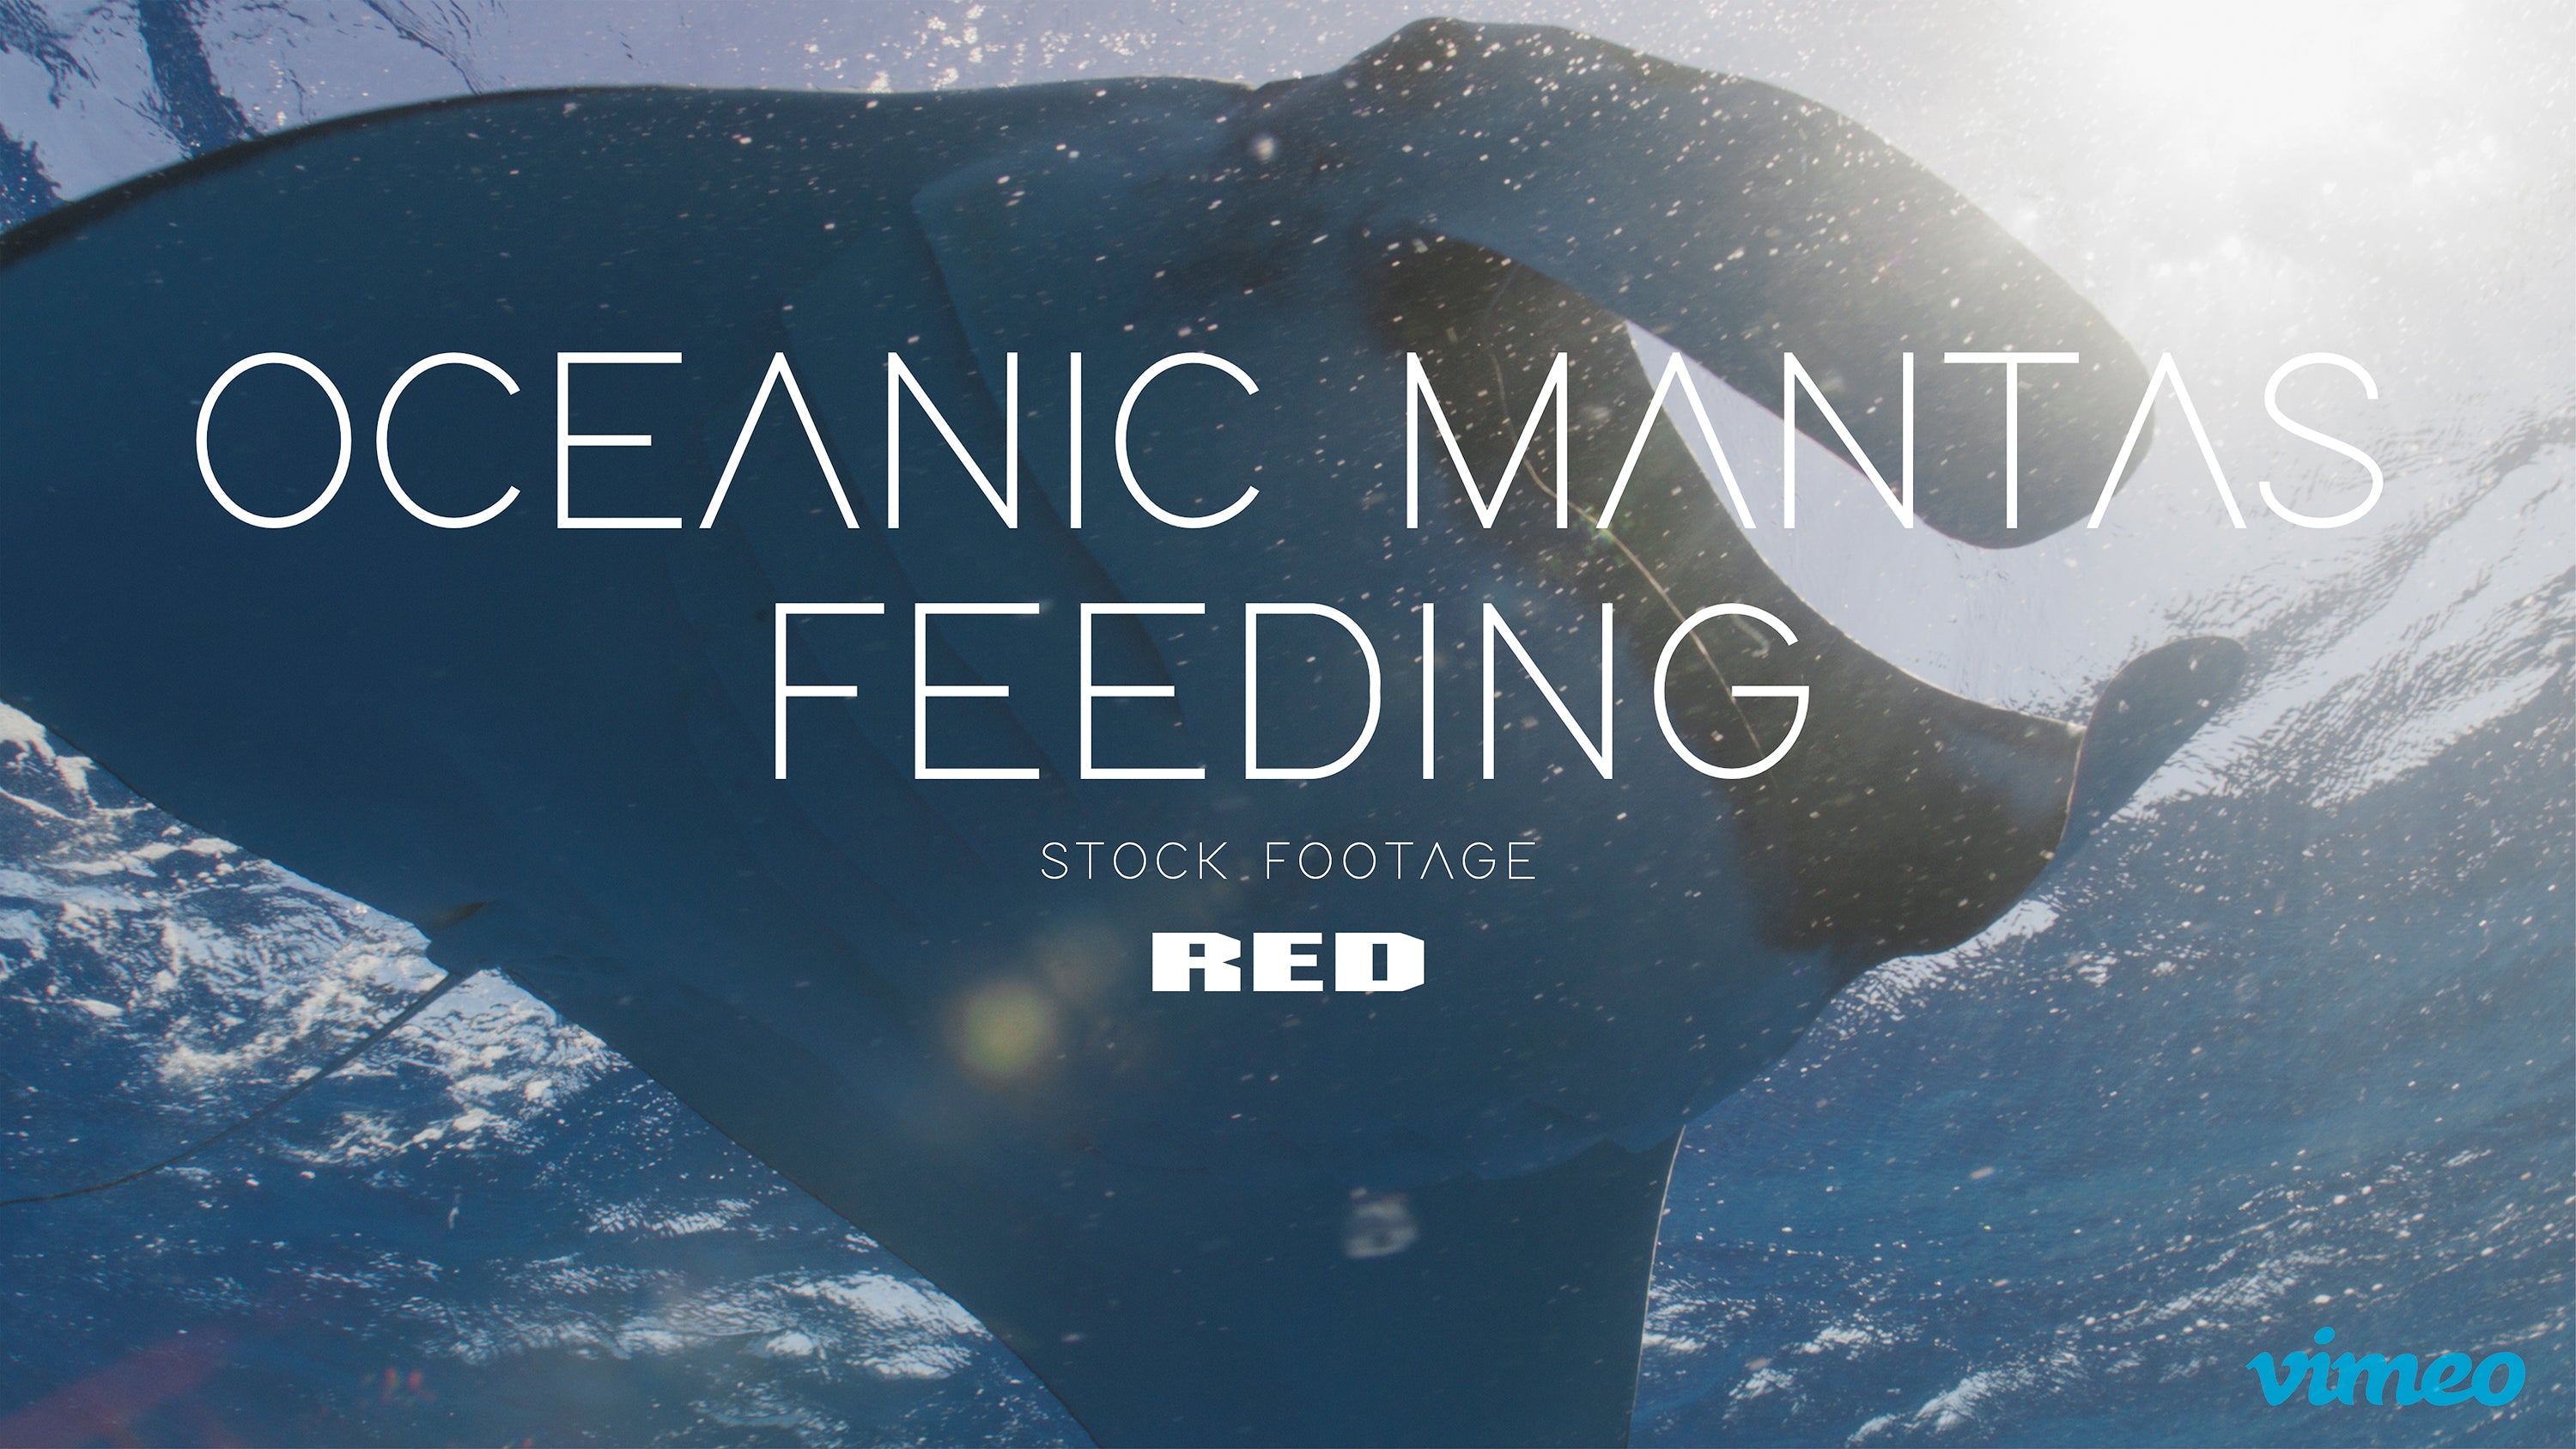 Oceanic mantas feeding